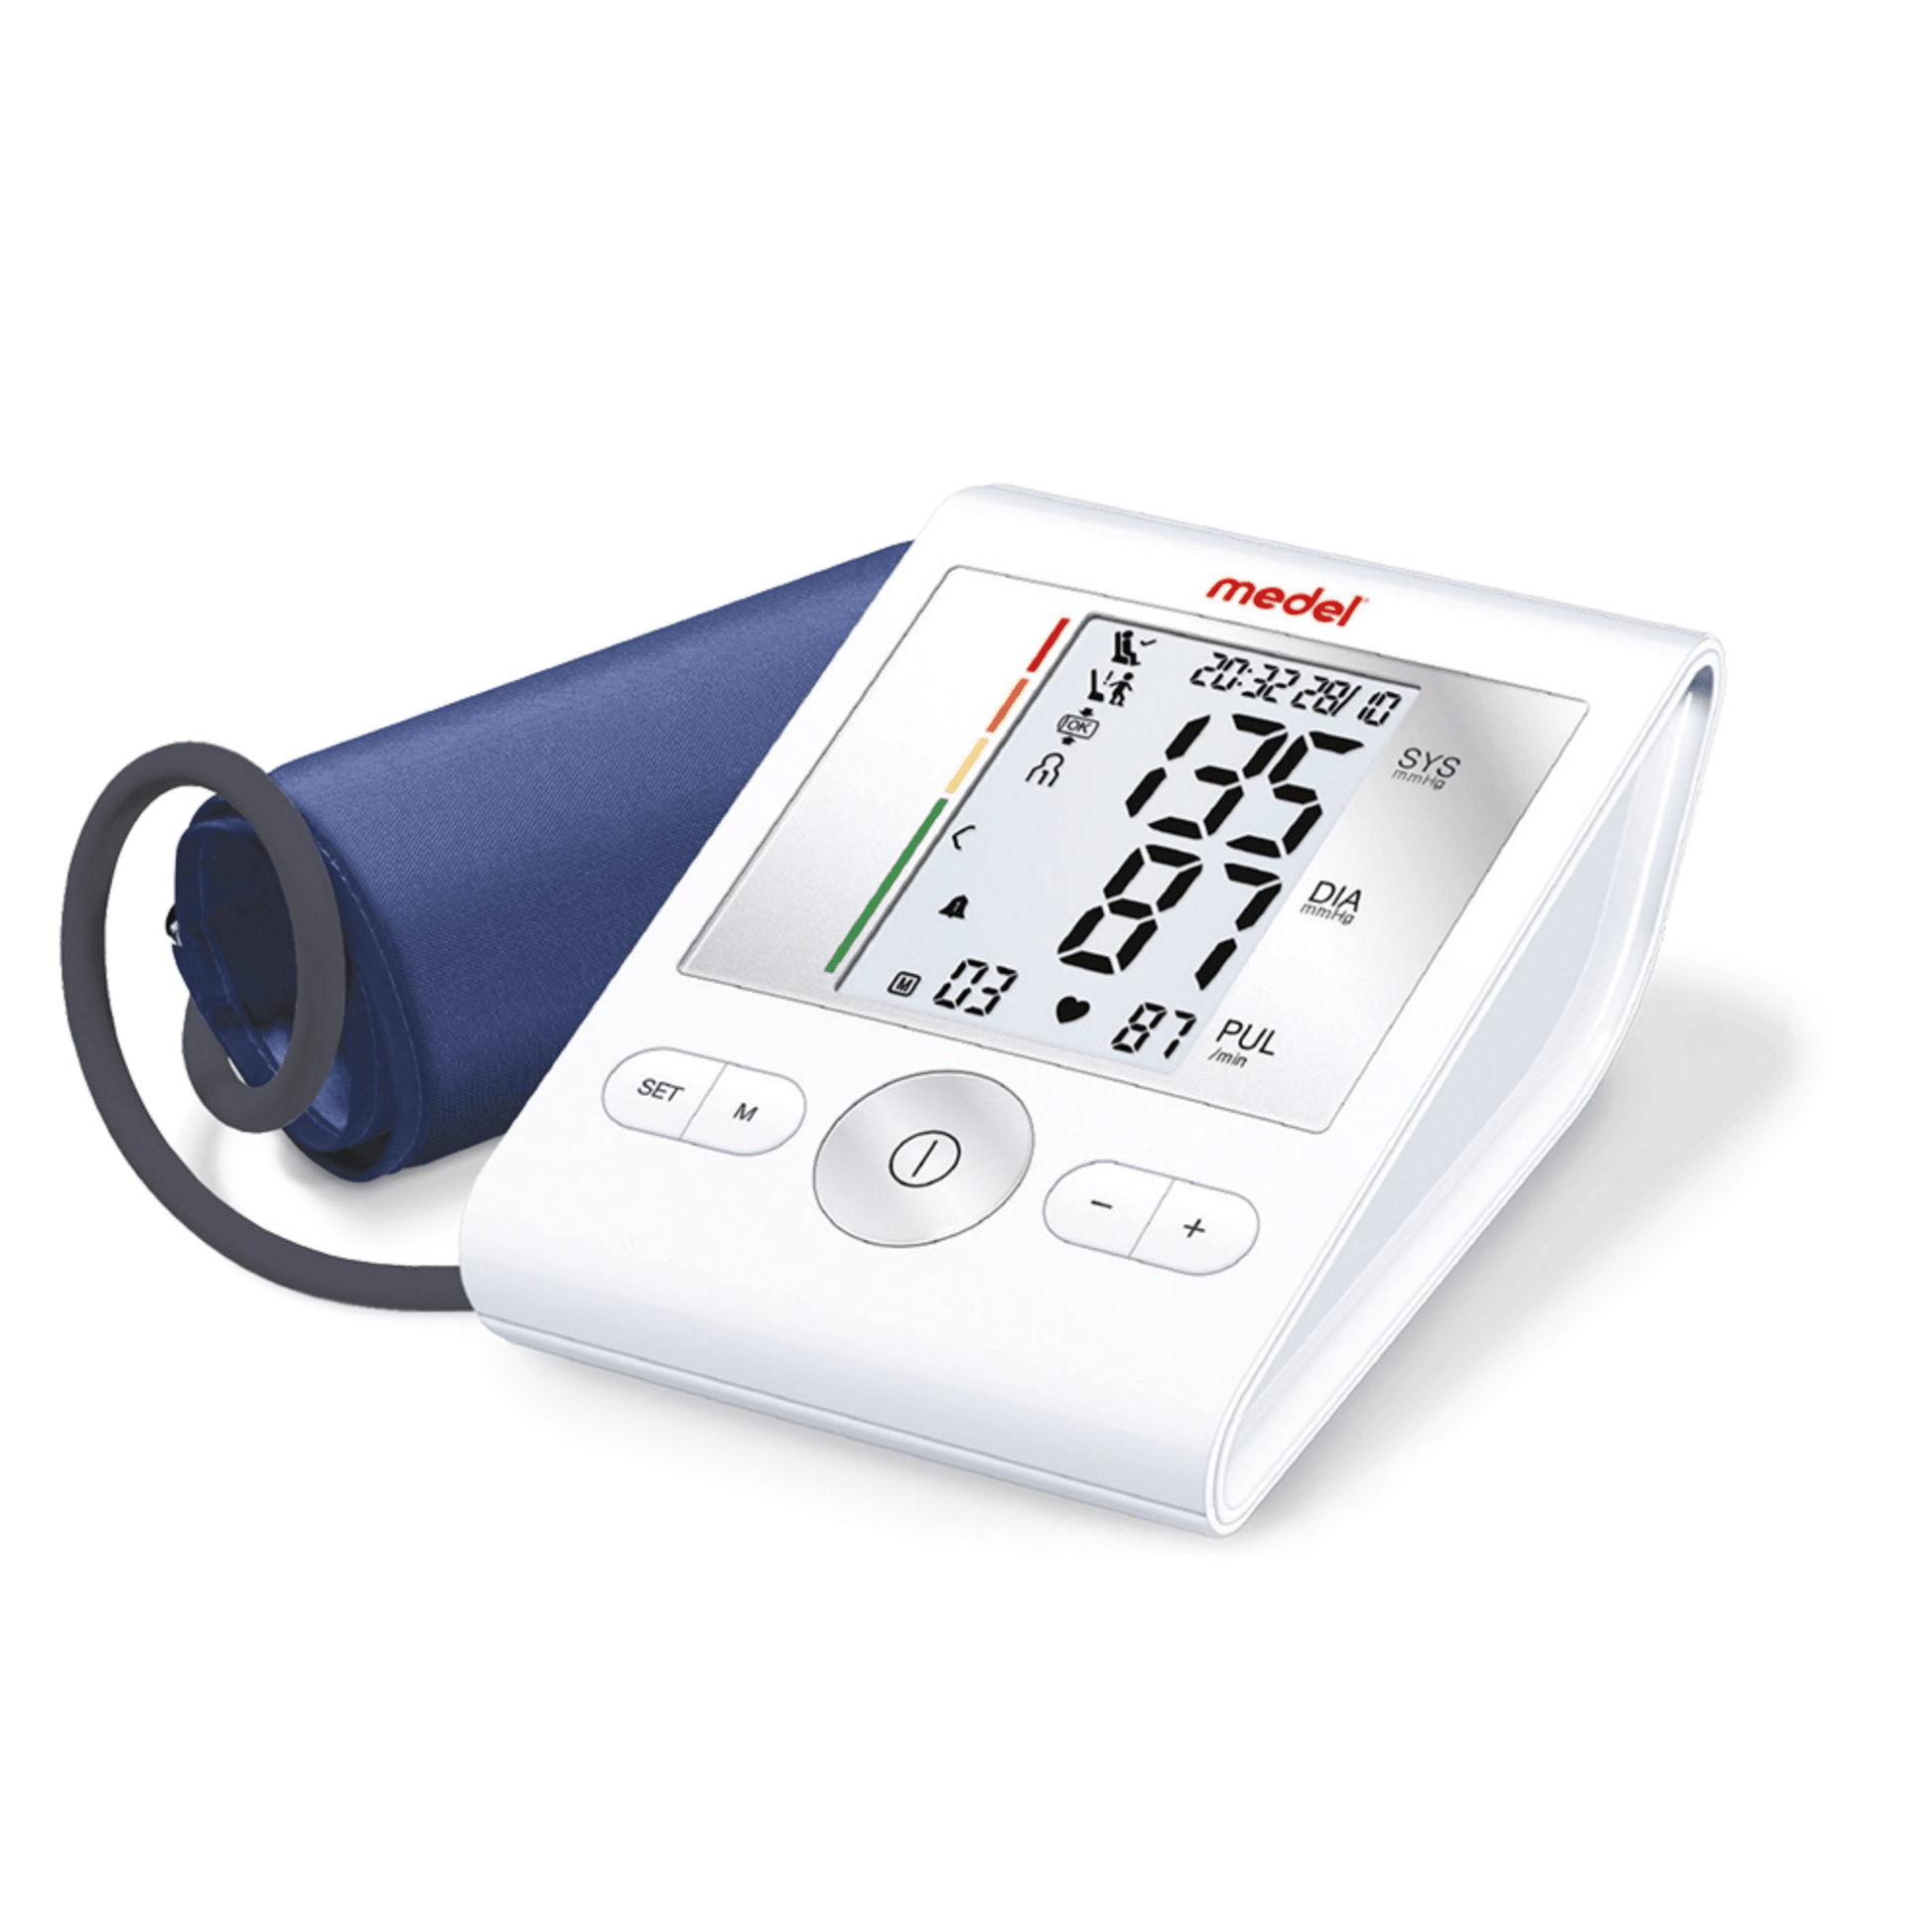 Medel Sense blood pressure monitor